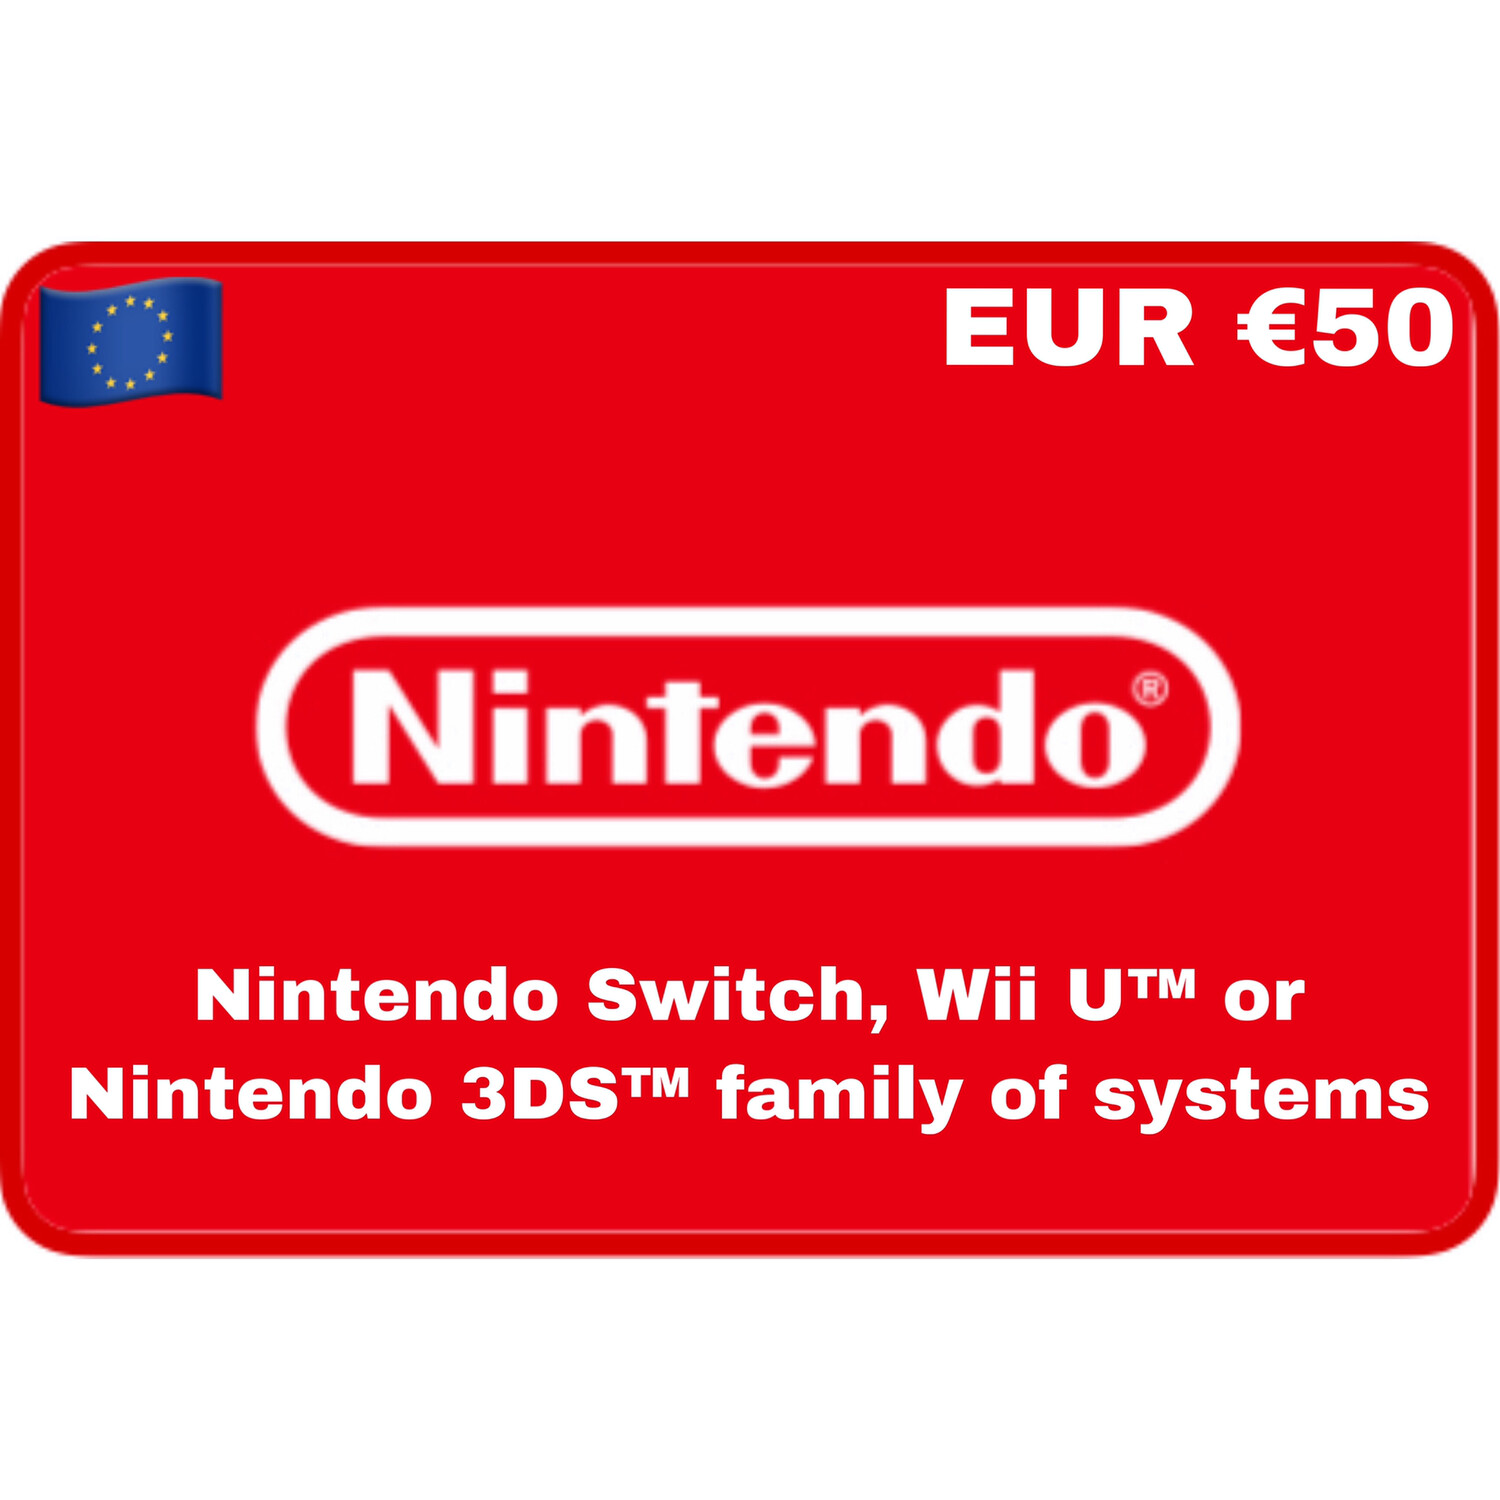 Nintendo eShop Europe EUR €50